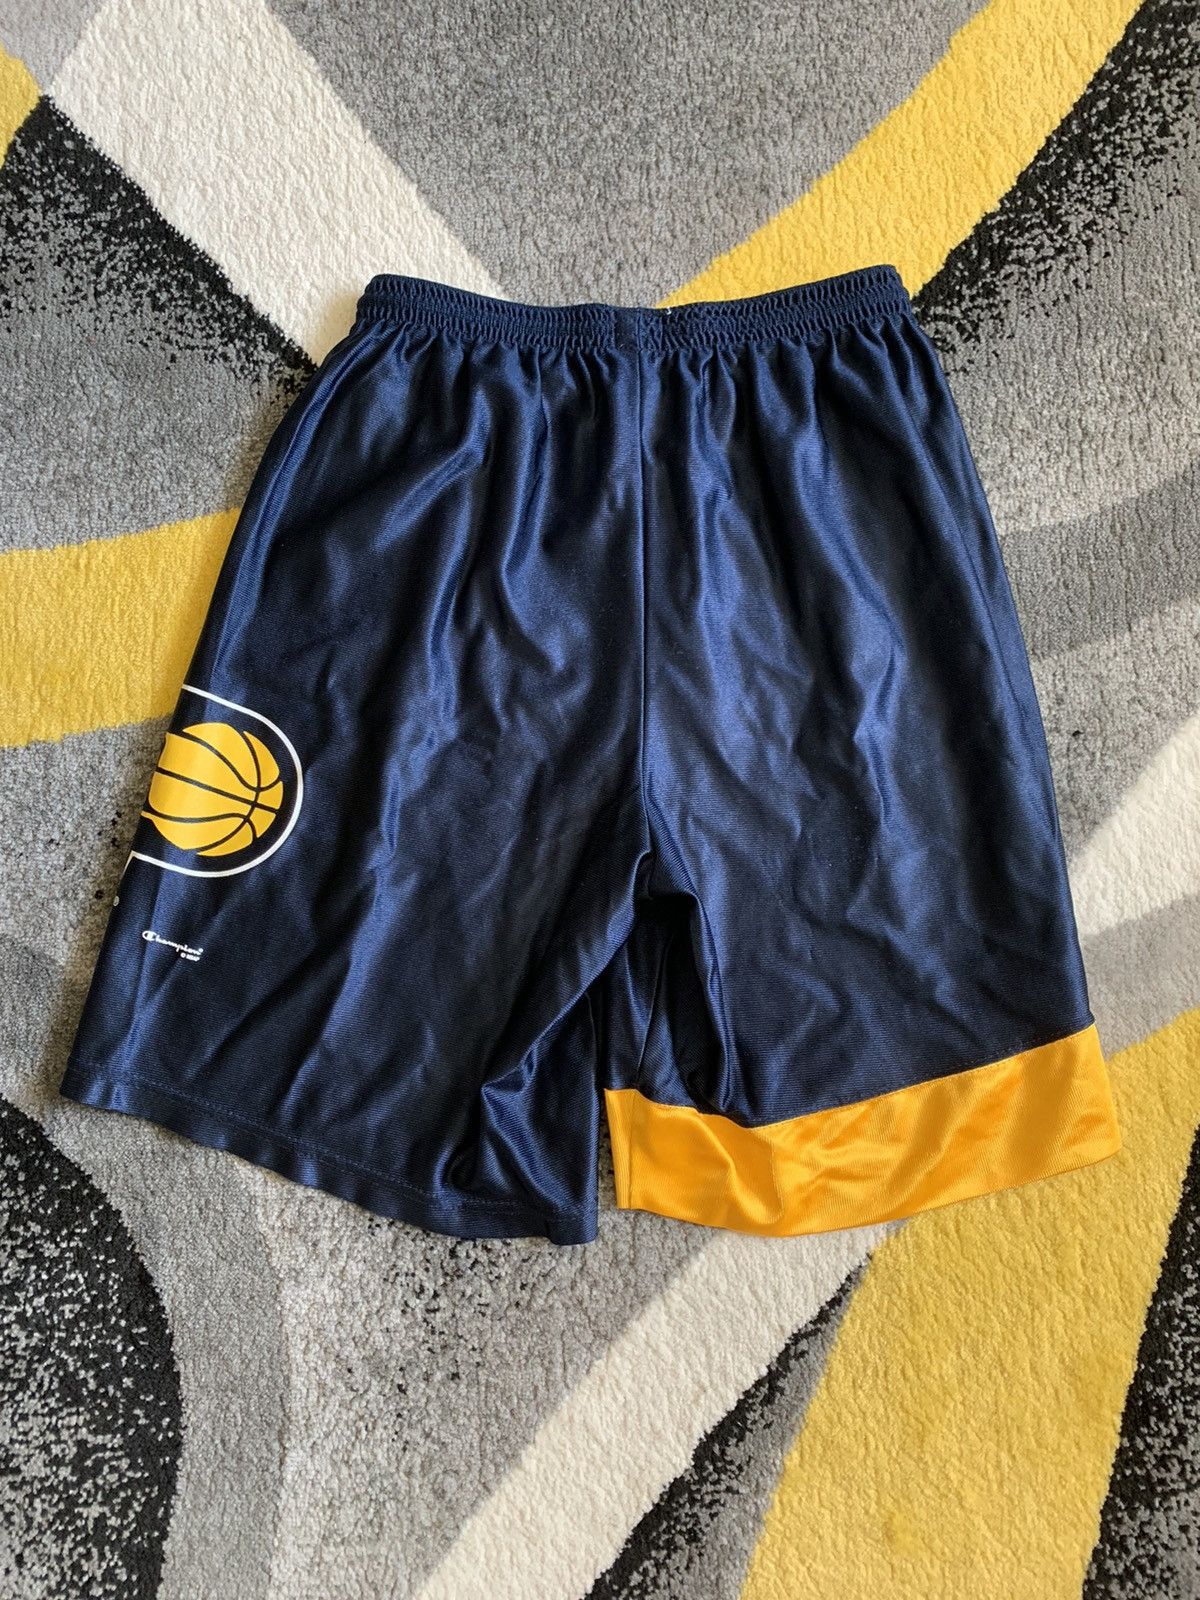 Vintage Indiana Pacer 90s Basketball Shorts Size US 30 / EU 46 - 3 Thumbnail